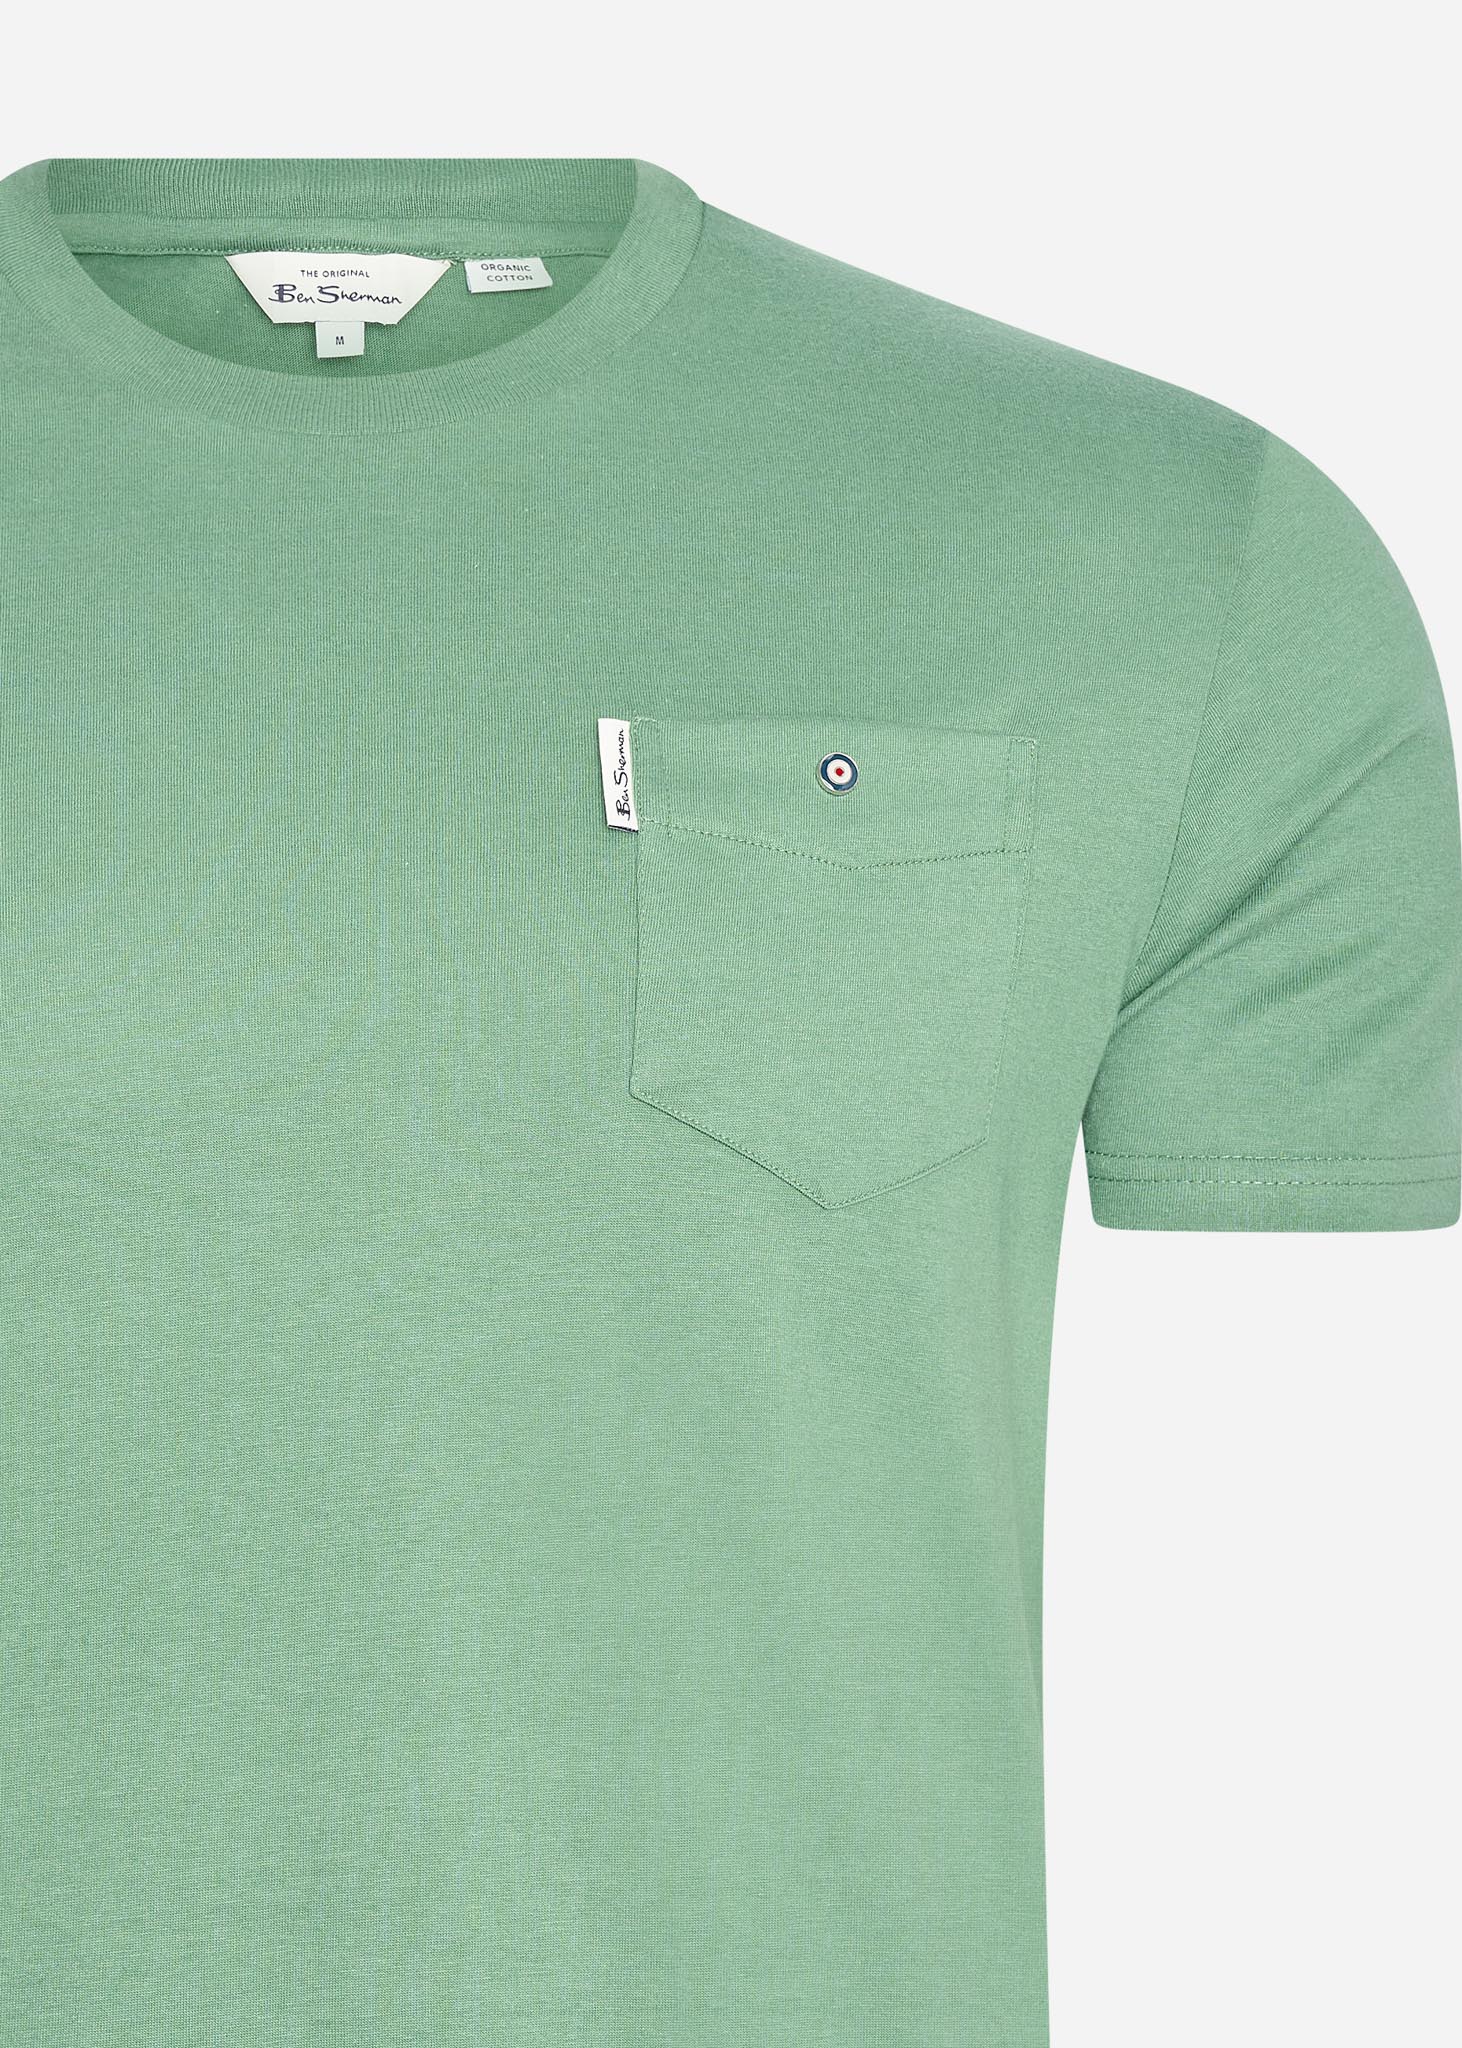 Ben Sherman T-shirts  Signature pocket tee - grass green 